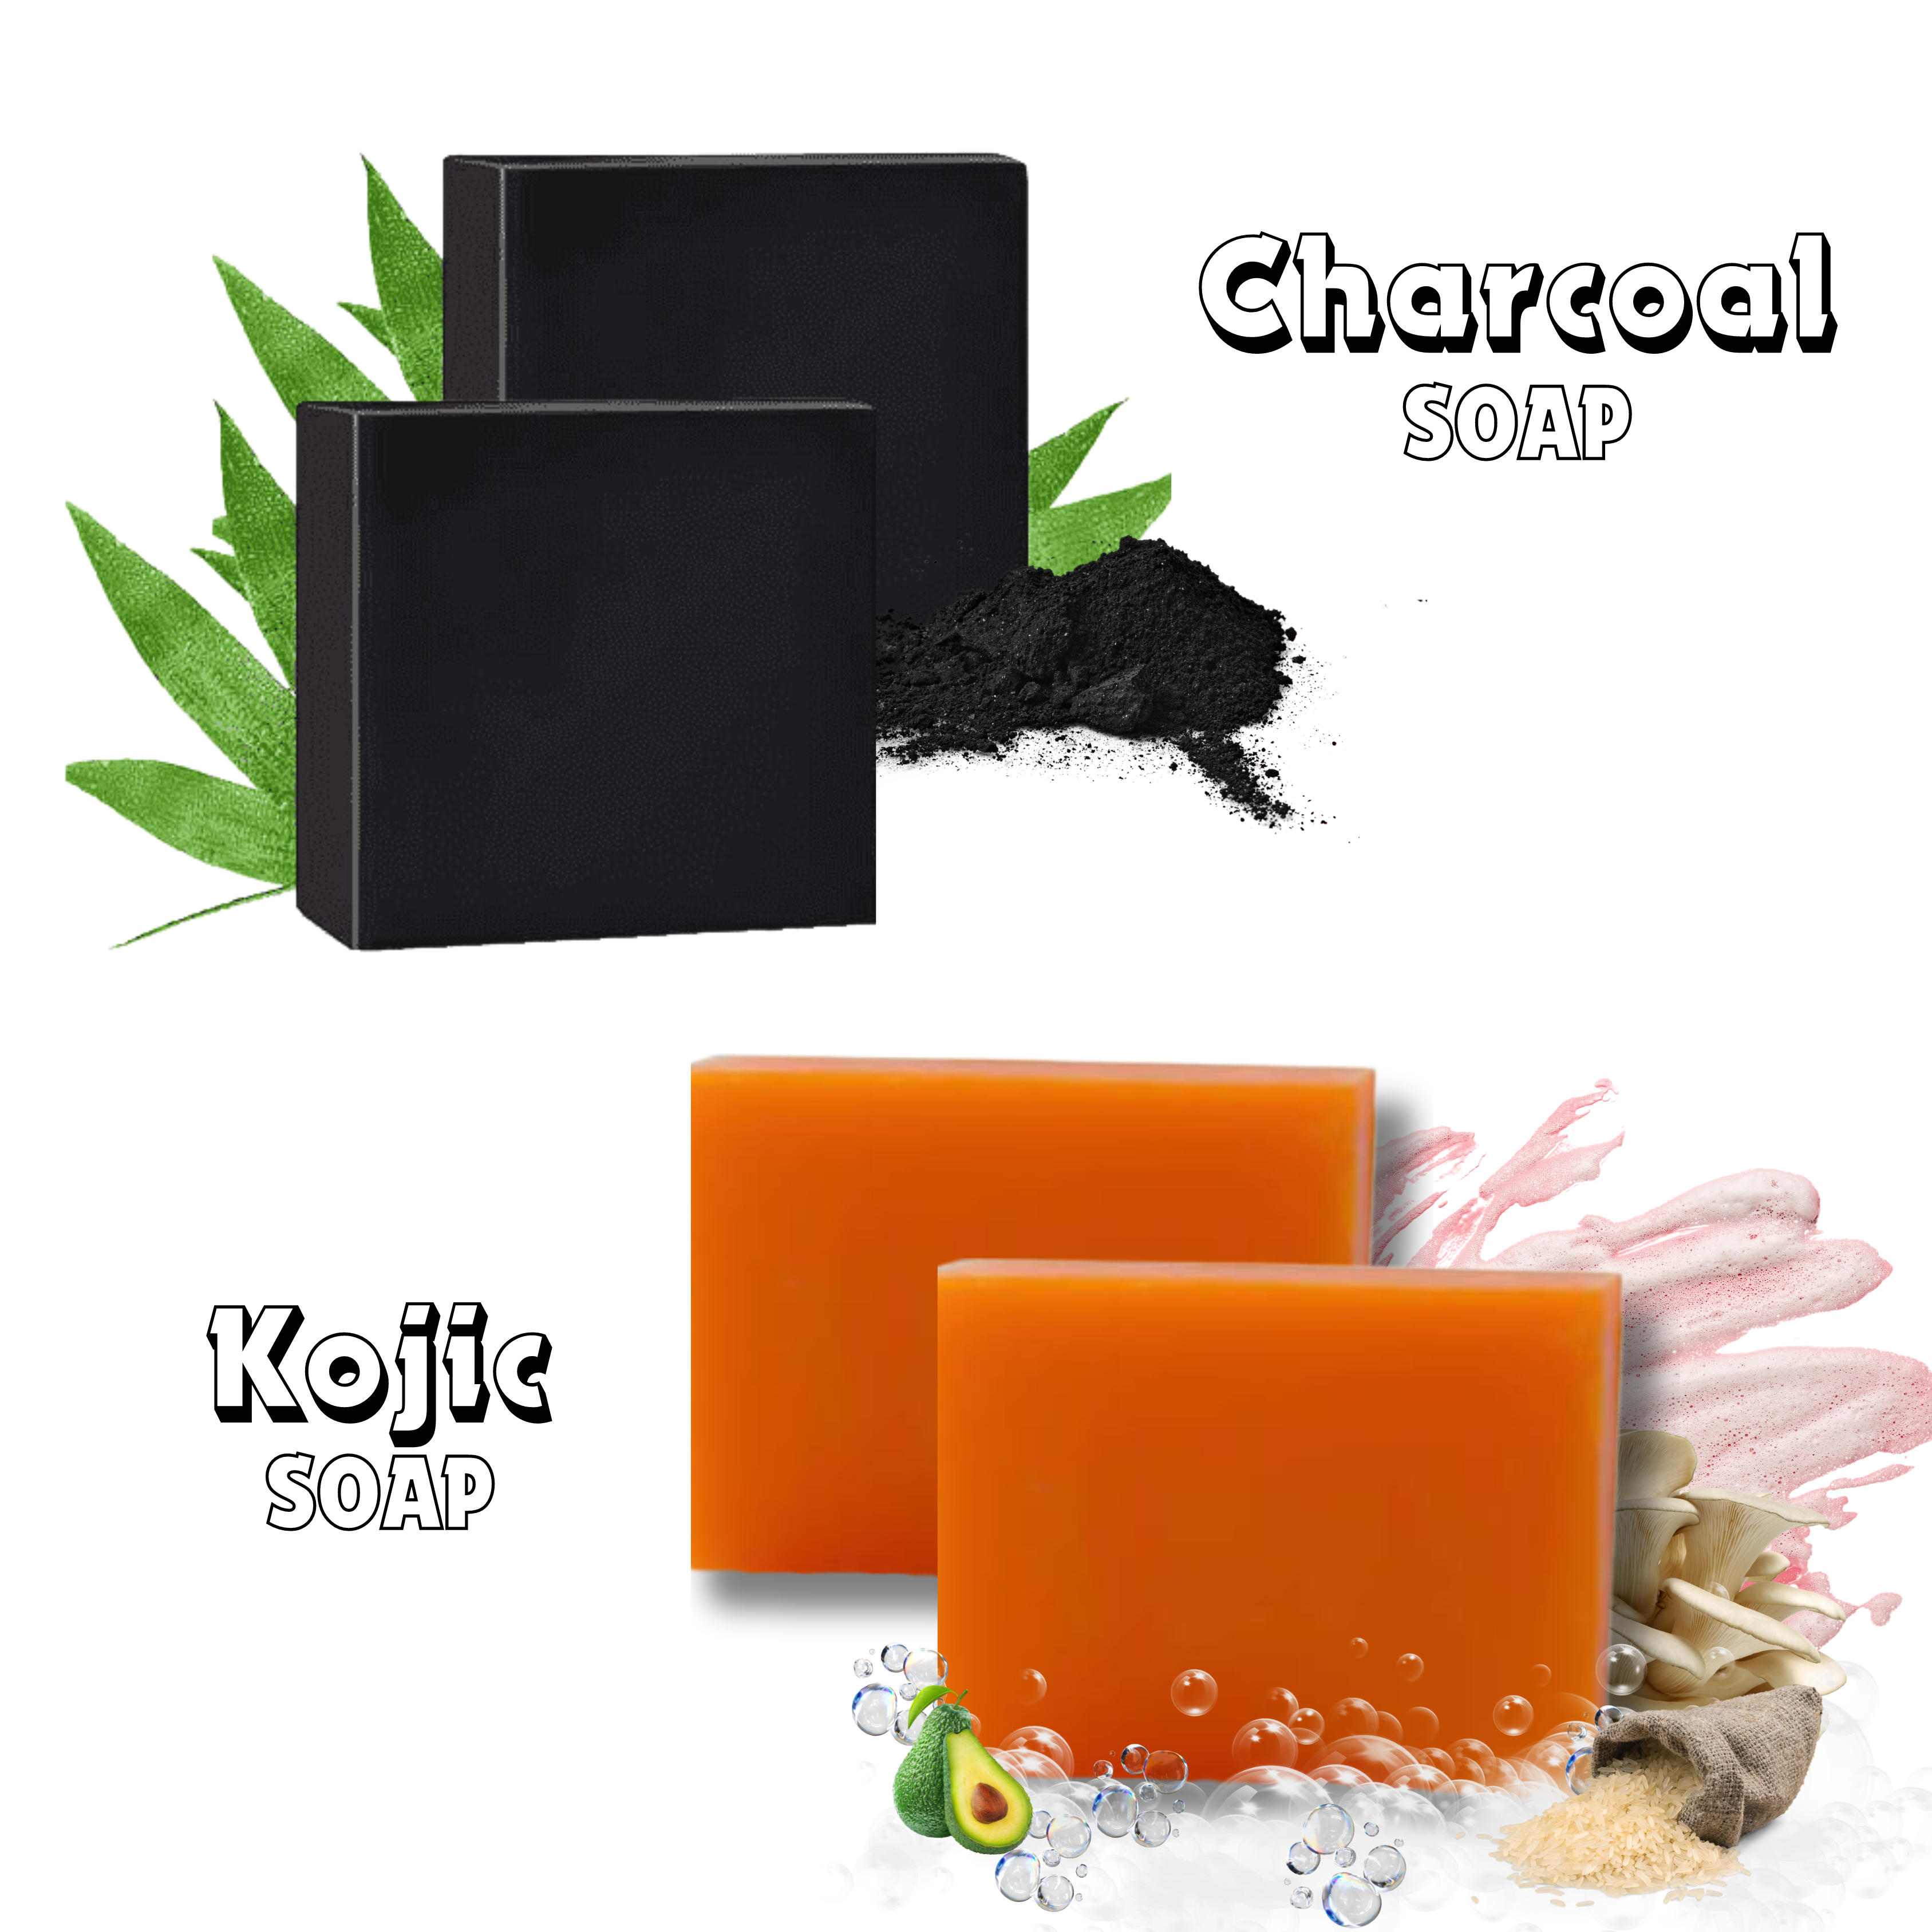 Charcoal soap 2, Kojic soap 2